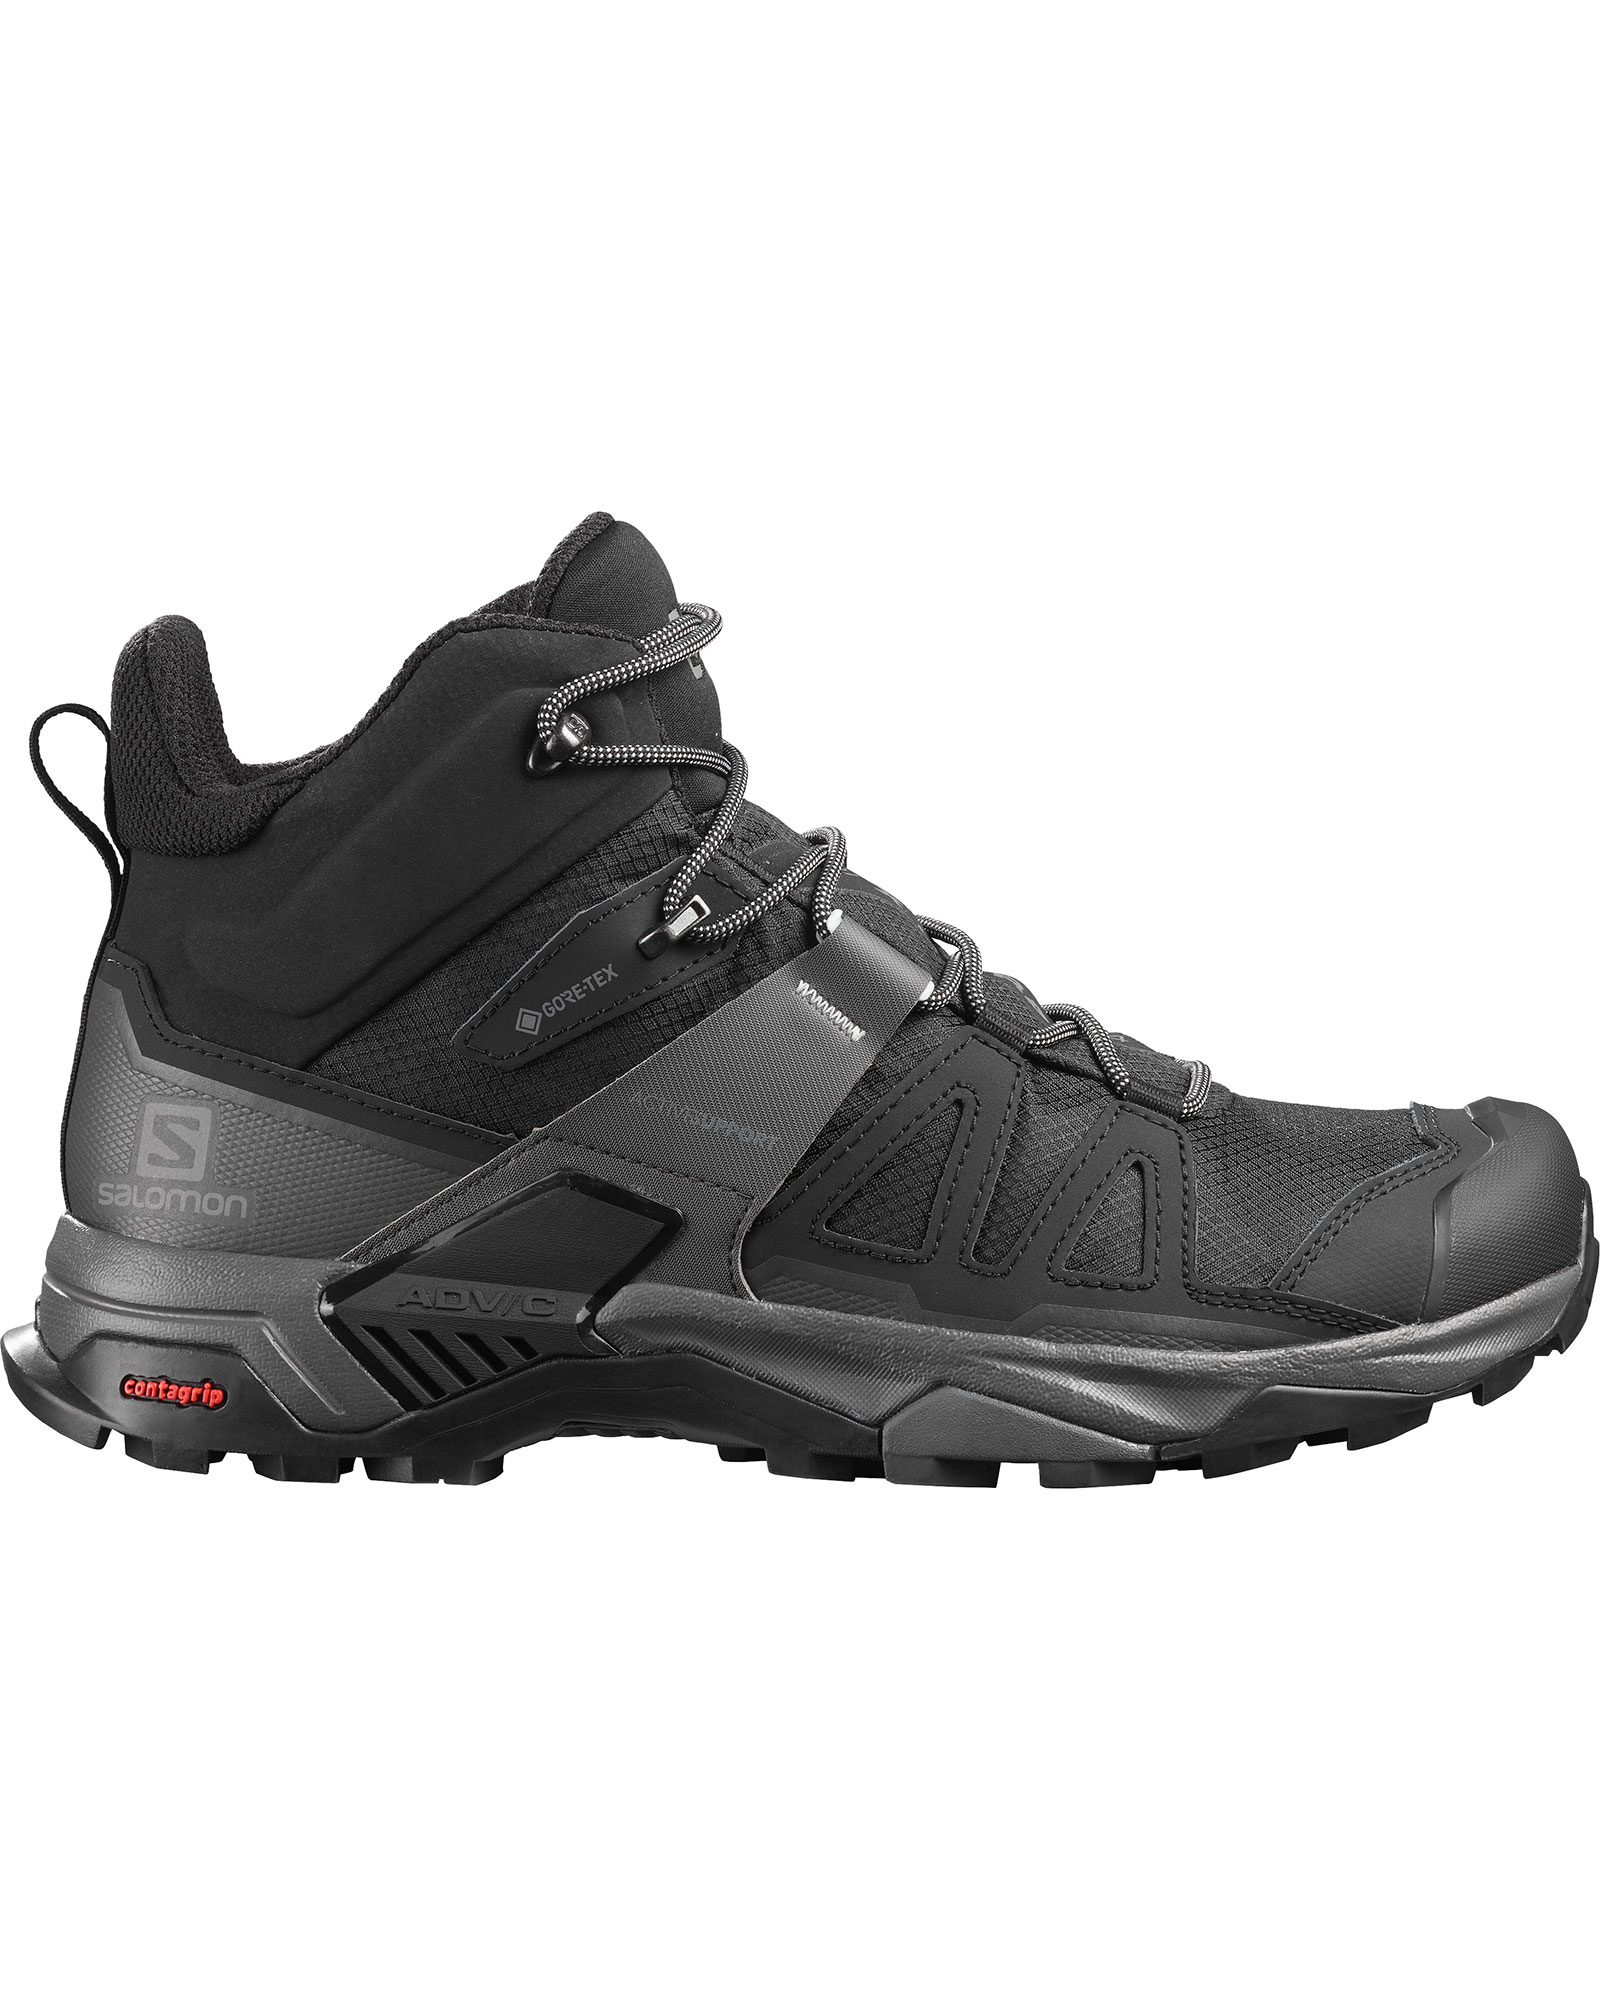 Salomon X Ultra 4 Mid GORE TEX Men’s Boots - Black/Magnet/Pearl Blue UK 8